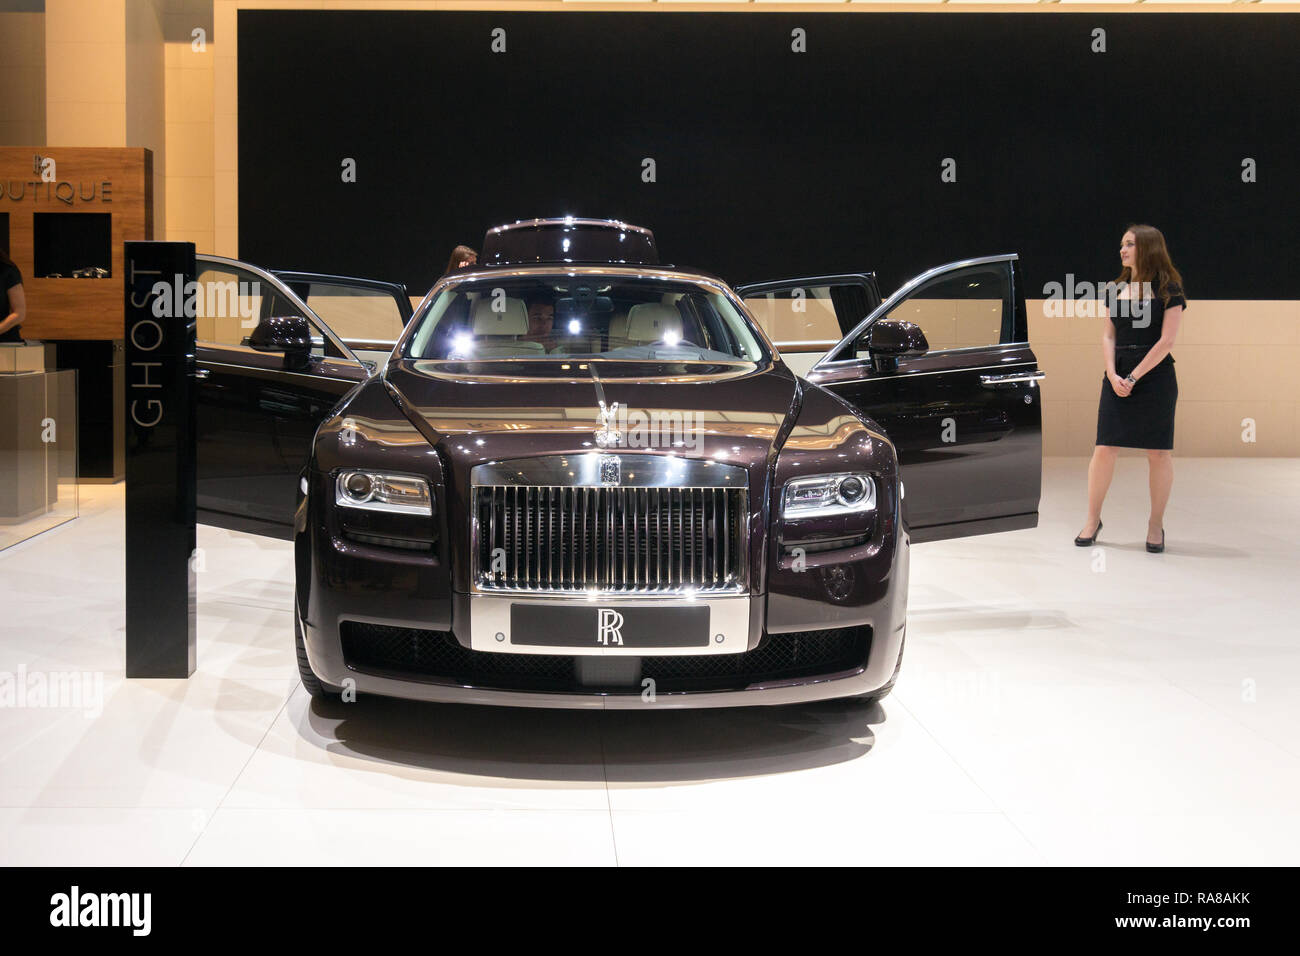 Francfort, Allemagne - Sep 13, 2013 : voiture de luxe Rolls Royce Ghost en vedette à l'IAA Frankfurt Motor Show. Banque D'Images